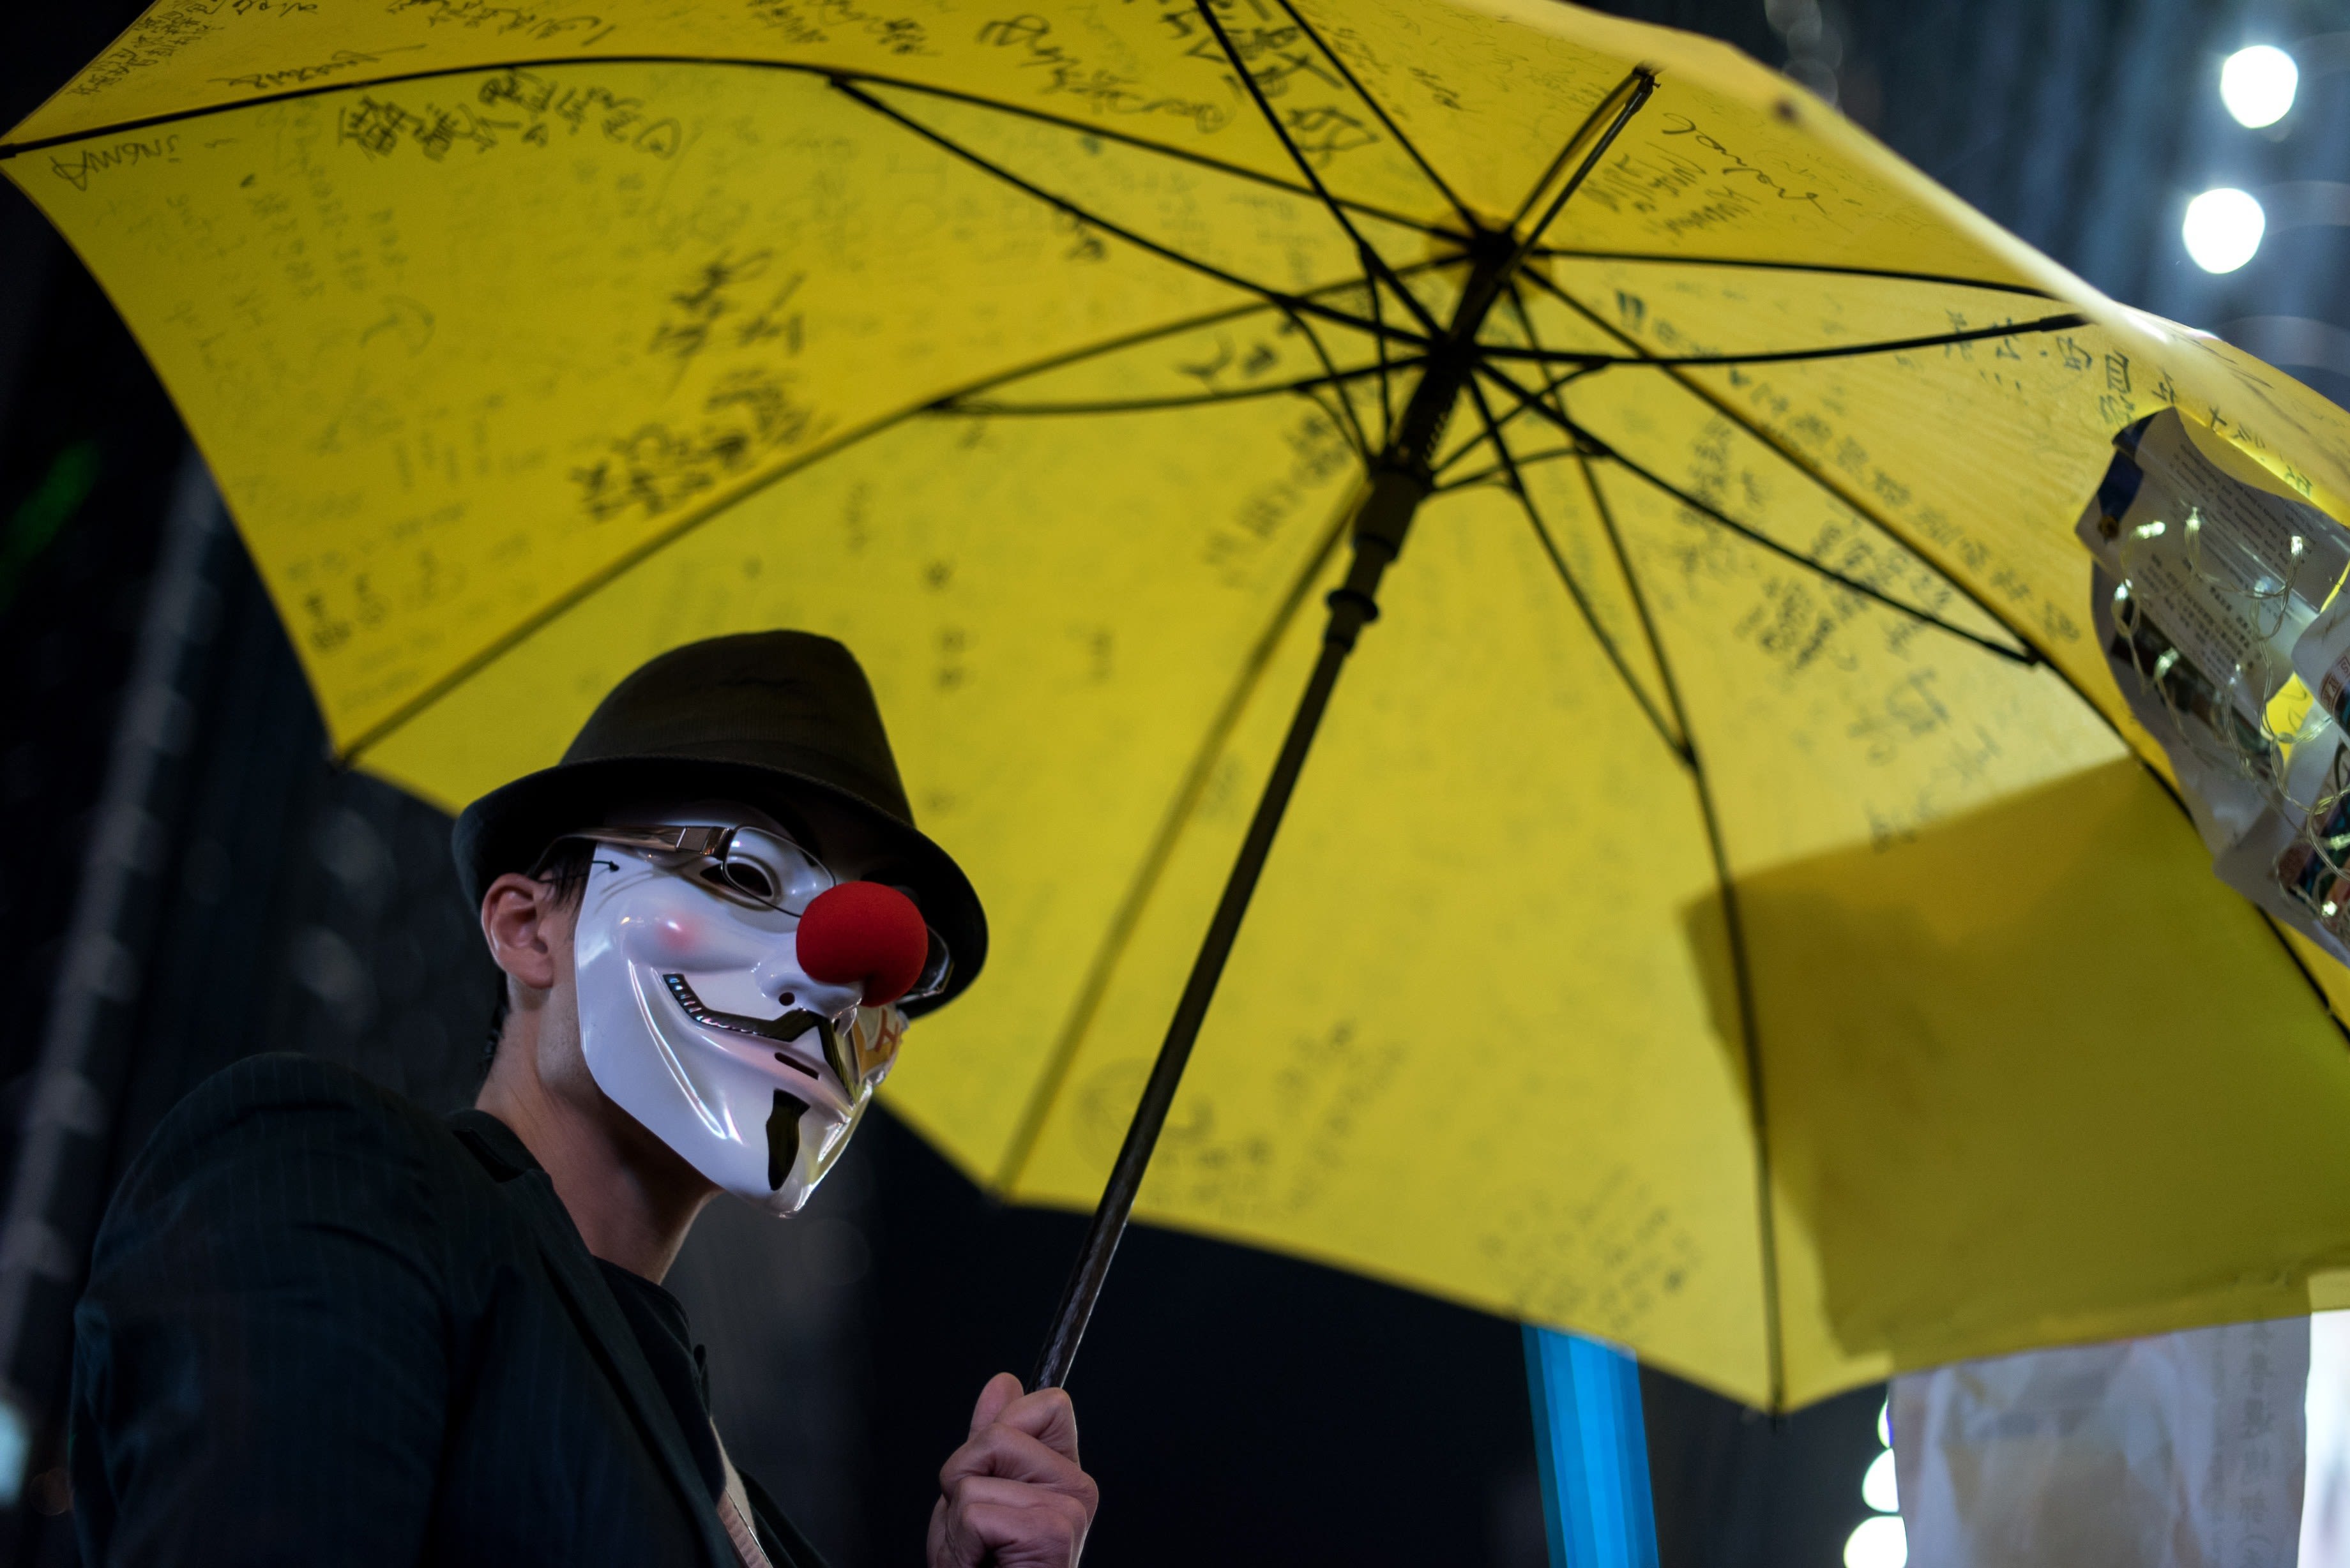 People 3680x2456 umbrella Hong Kong Umbrella Movement yellow protestors men night mask hat red nose men outdoors lights